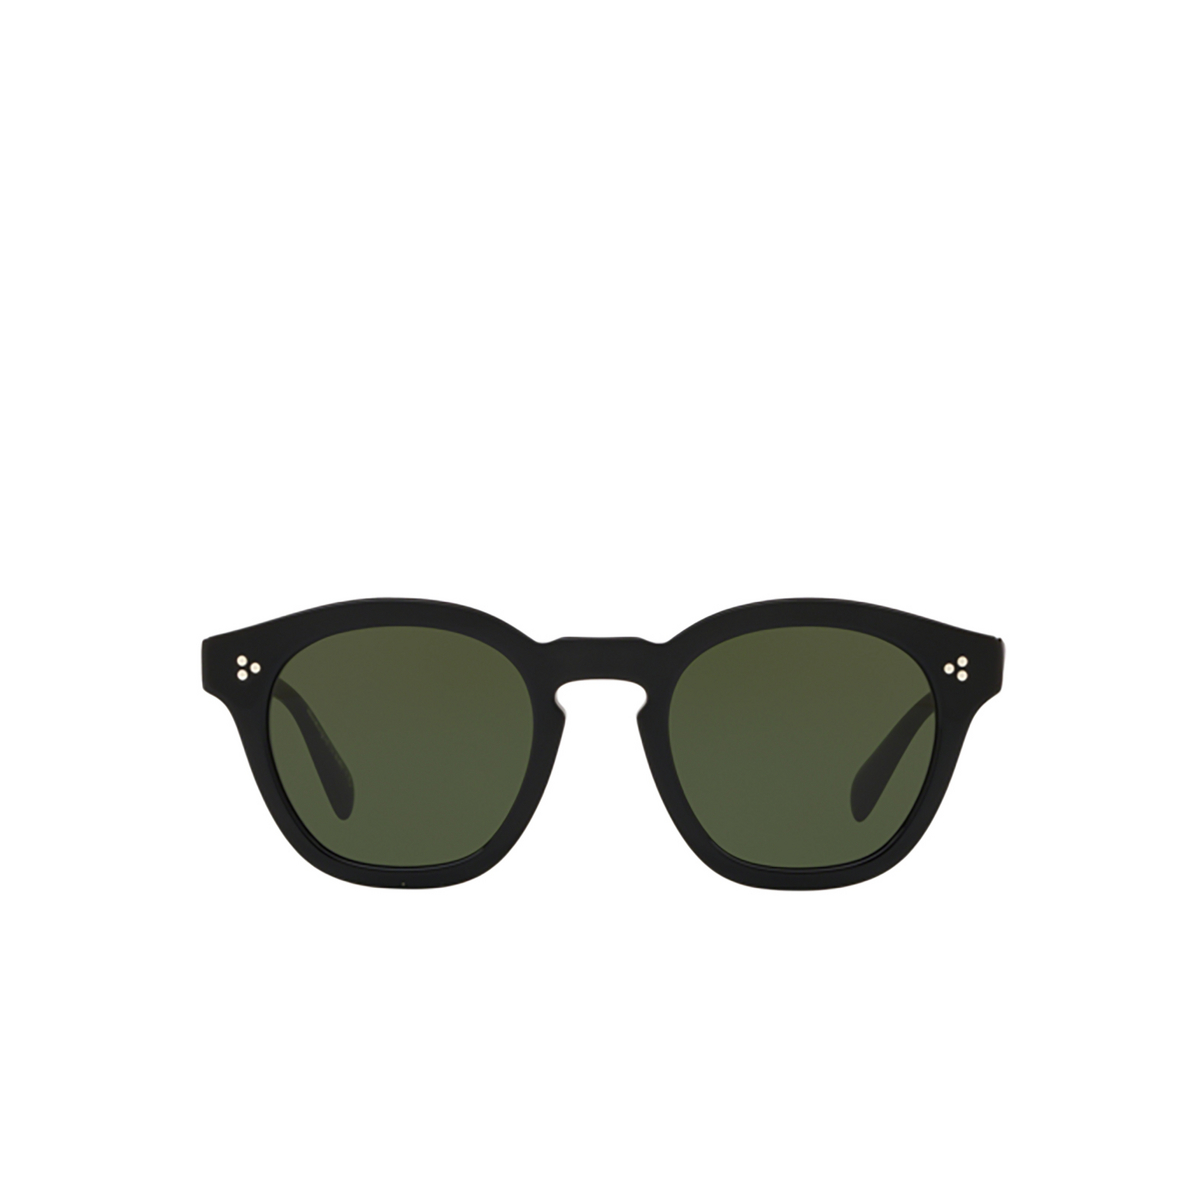 Oliver Peoples BOUDREAU L.A Sunglasses 100571 Black - front view